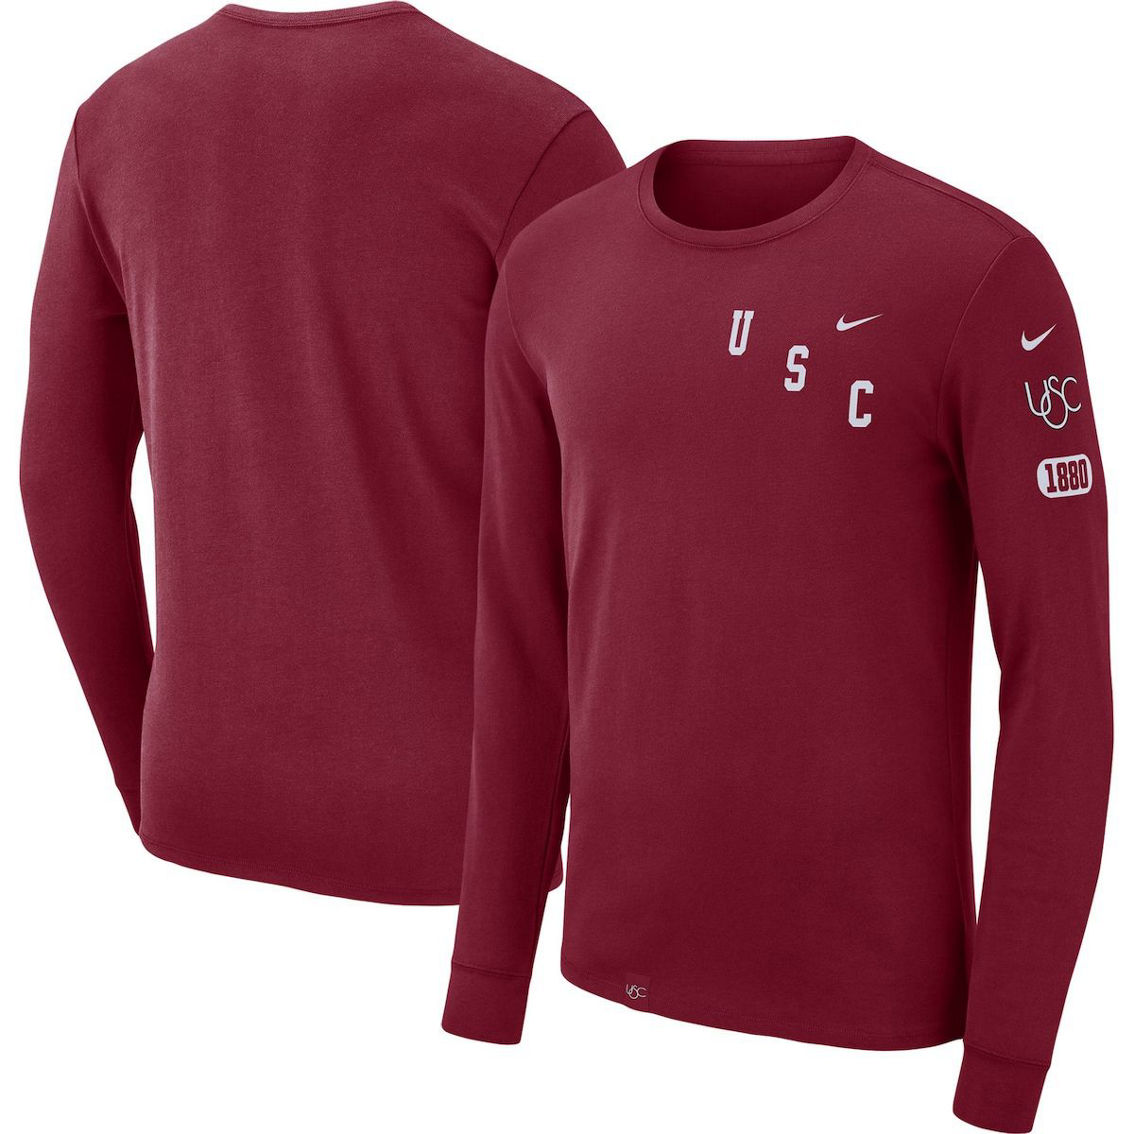 Nike Men's Cardinal USC Trojans Repeat Logo 2-Hit Long Sleeve T-Shirt - Image 2 of 4